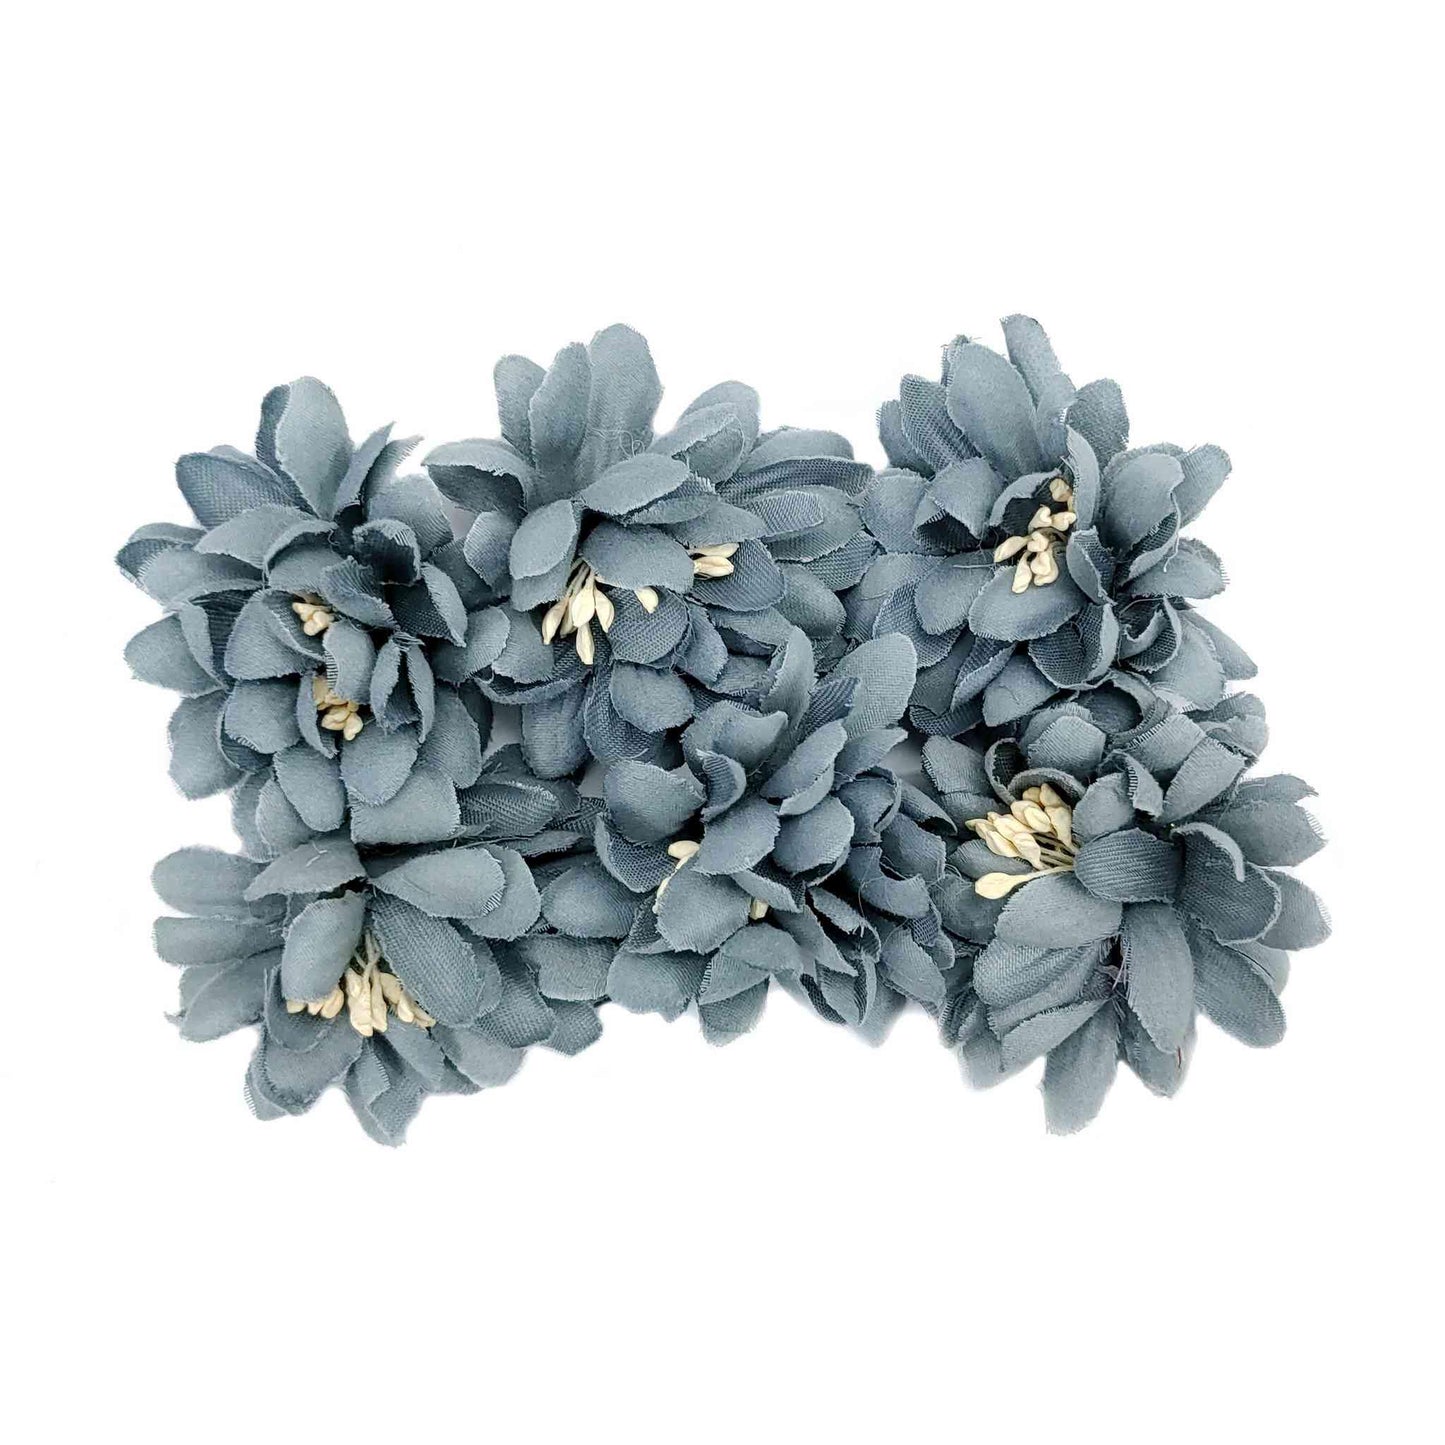 Indian Petals Beautiful Big Fabric Flowers for DIY Craft, Trouseau Packing or Decoration (Bunch of 12) - Design 40, Dark Gray - Indian Petals